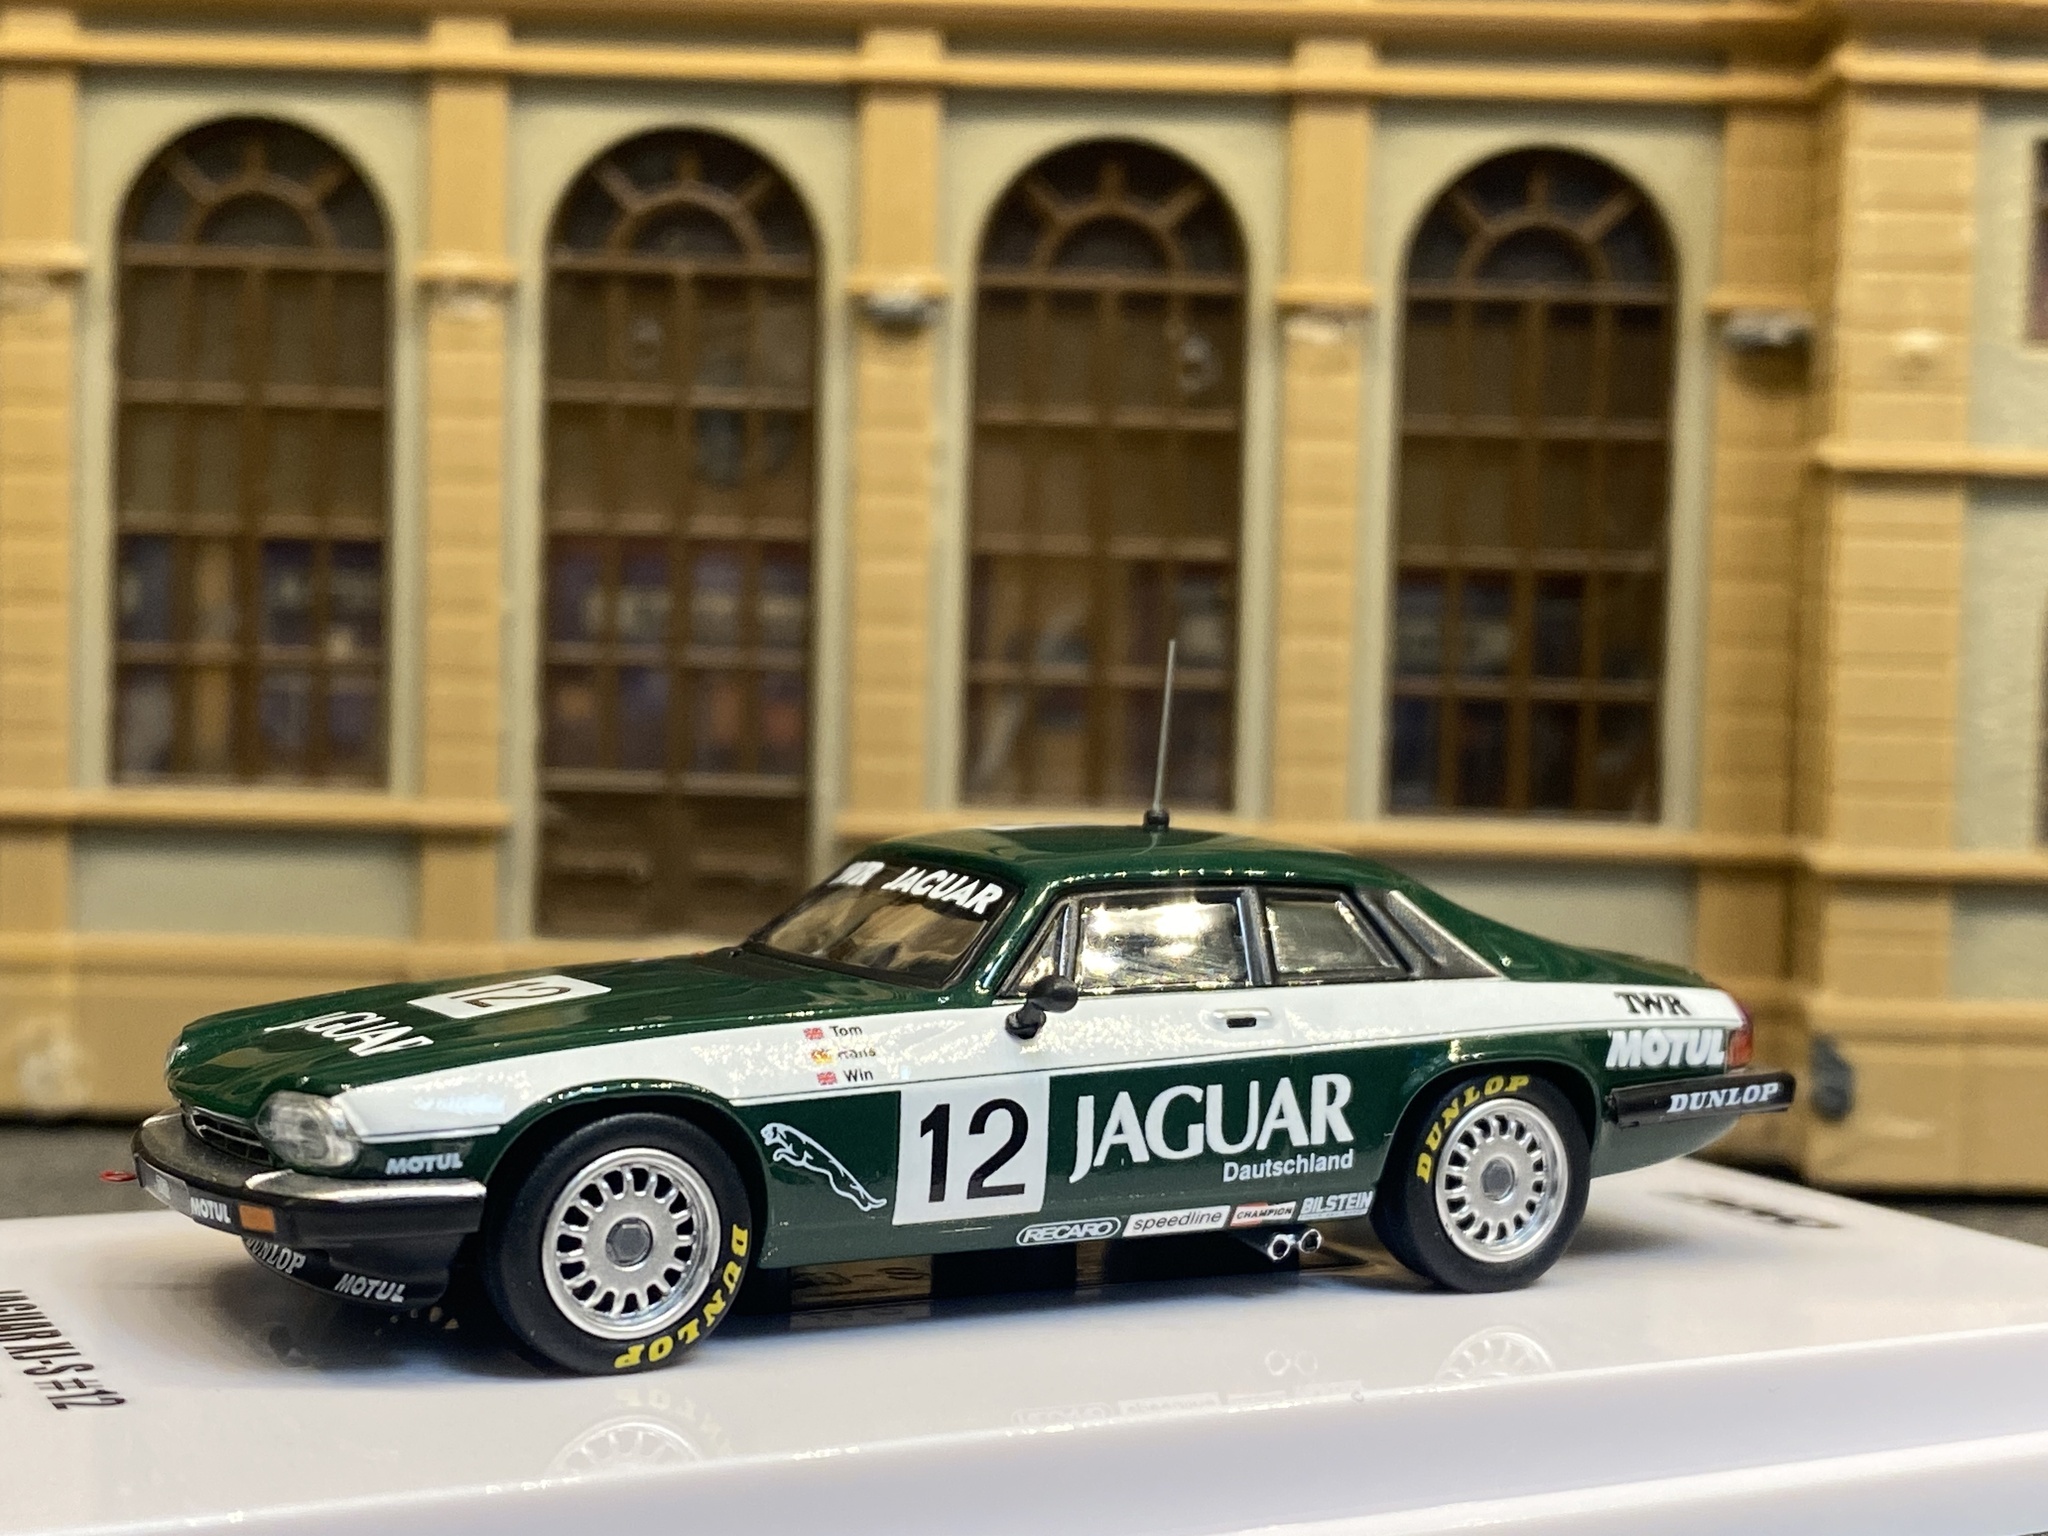 Skala 1/64 Jaguar XJ-S, TWR Racing ETCC Spa-Francorchamps 1984 Winner fr Inno64